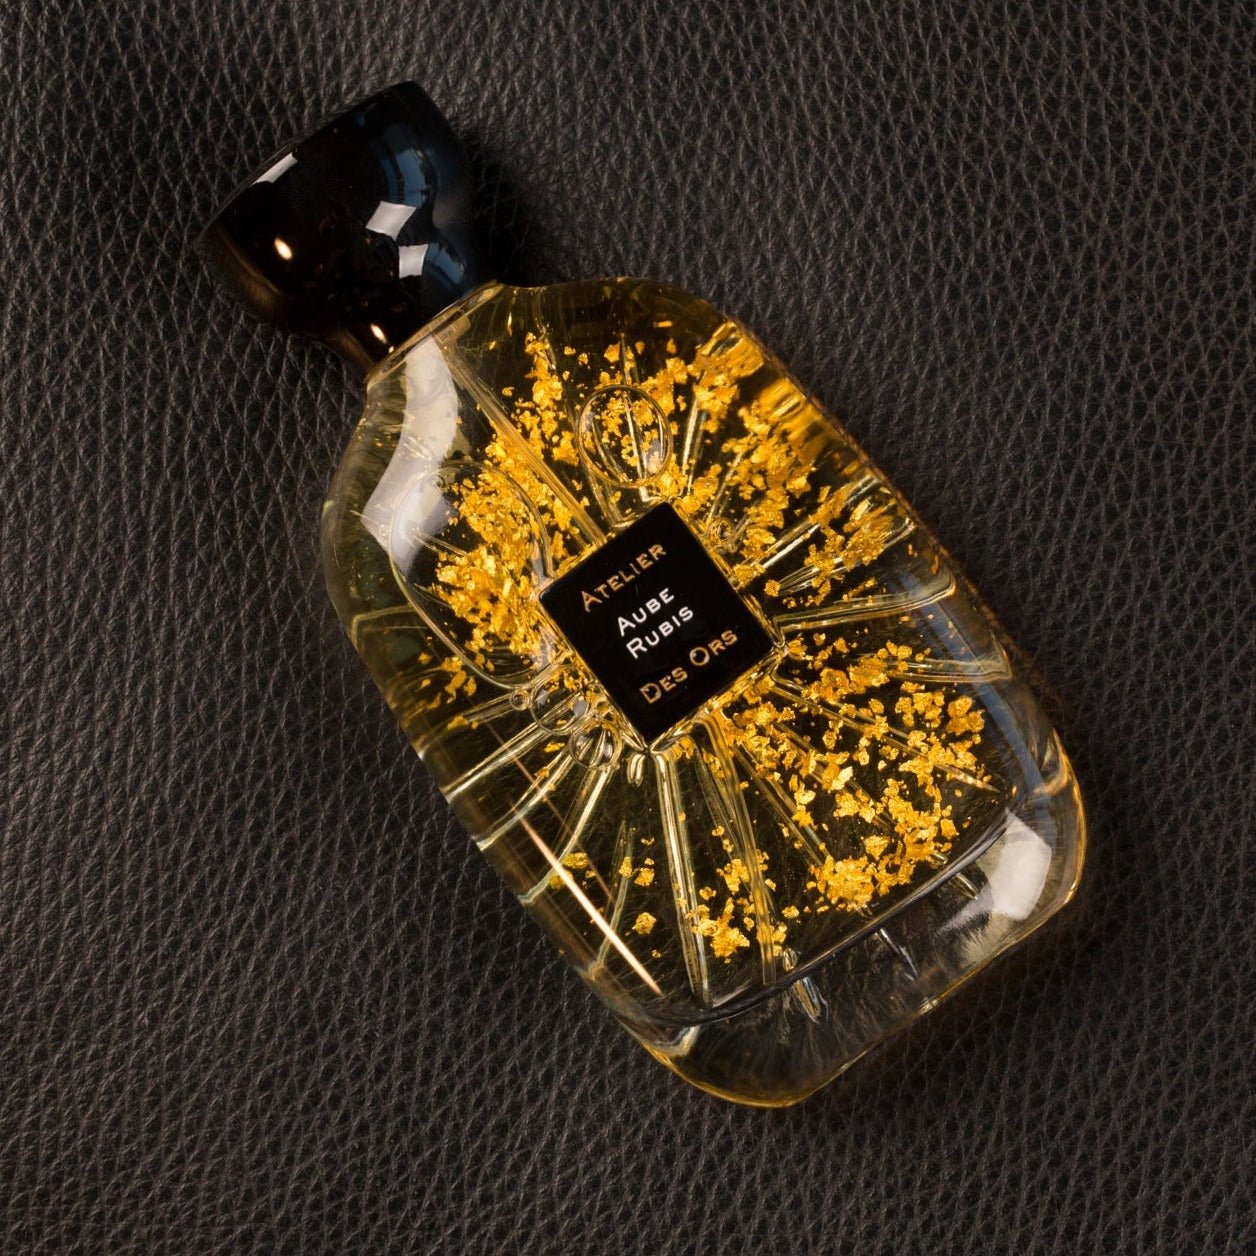 Atelier Des Ors Aube Rubis EDP | My Perfume Shop Australia